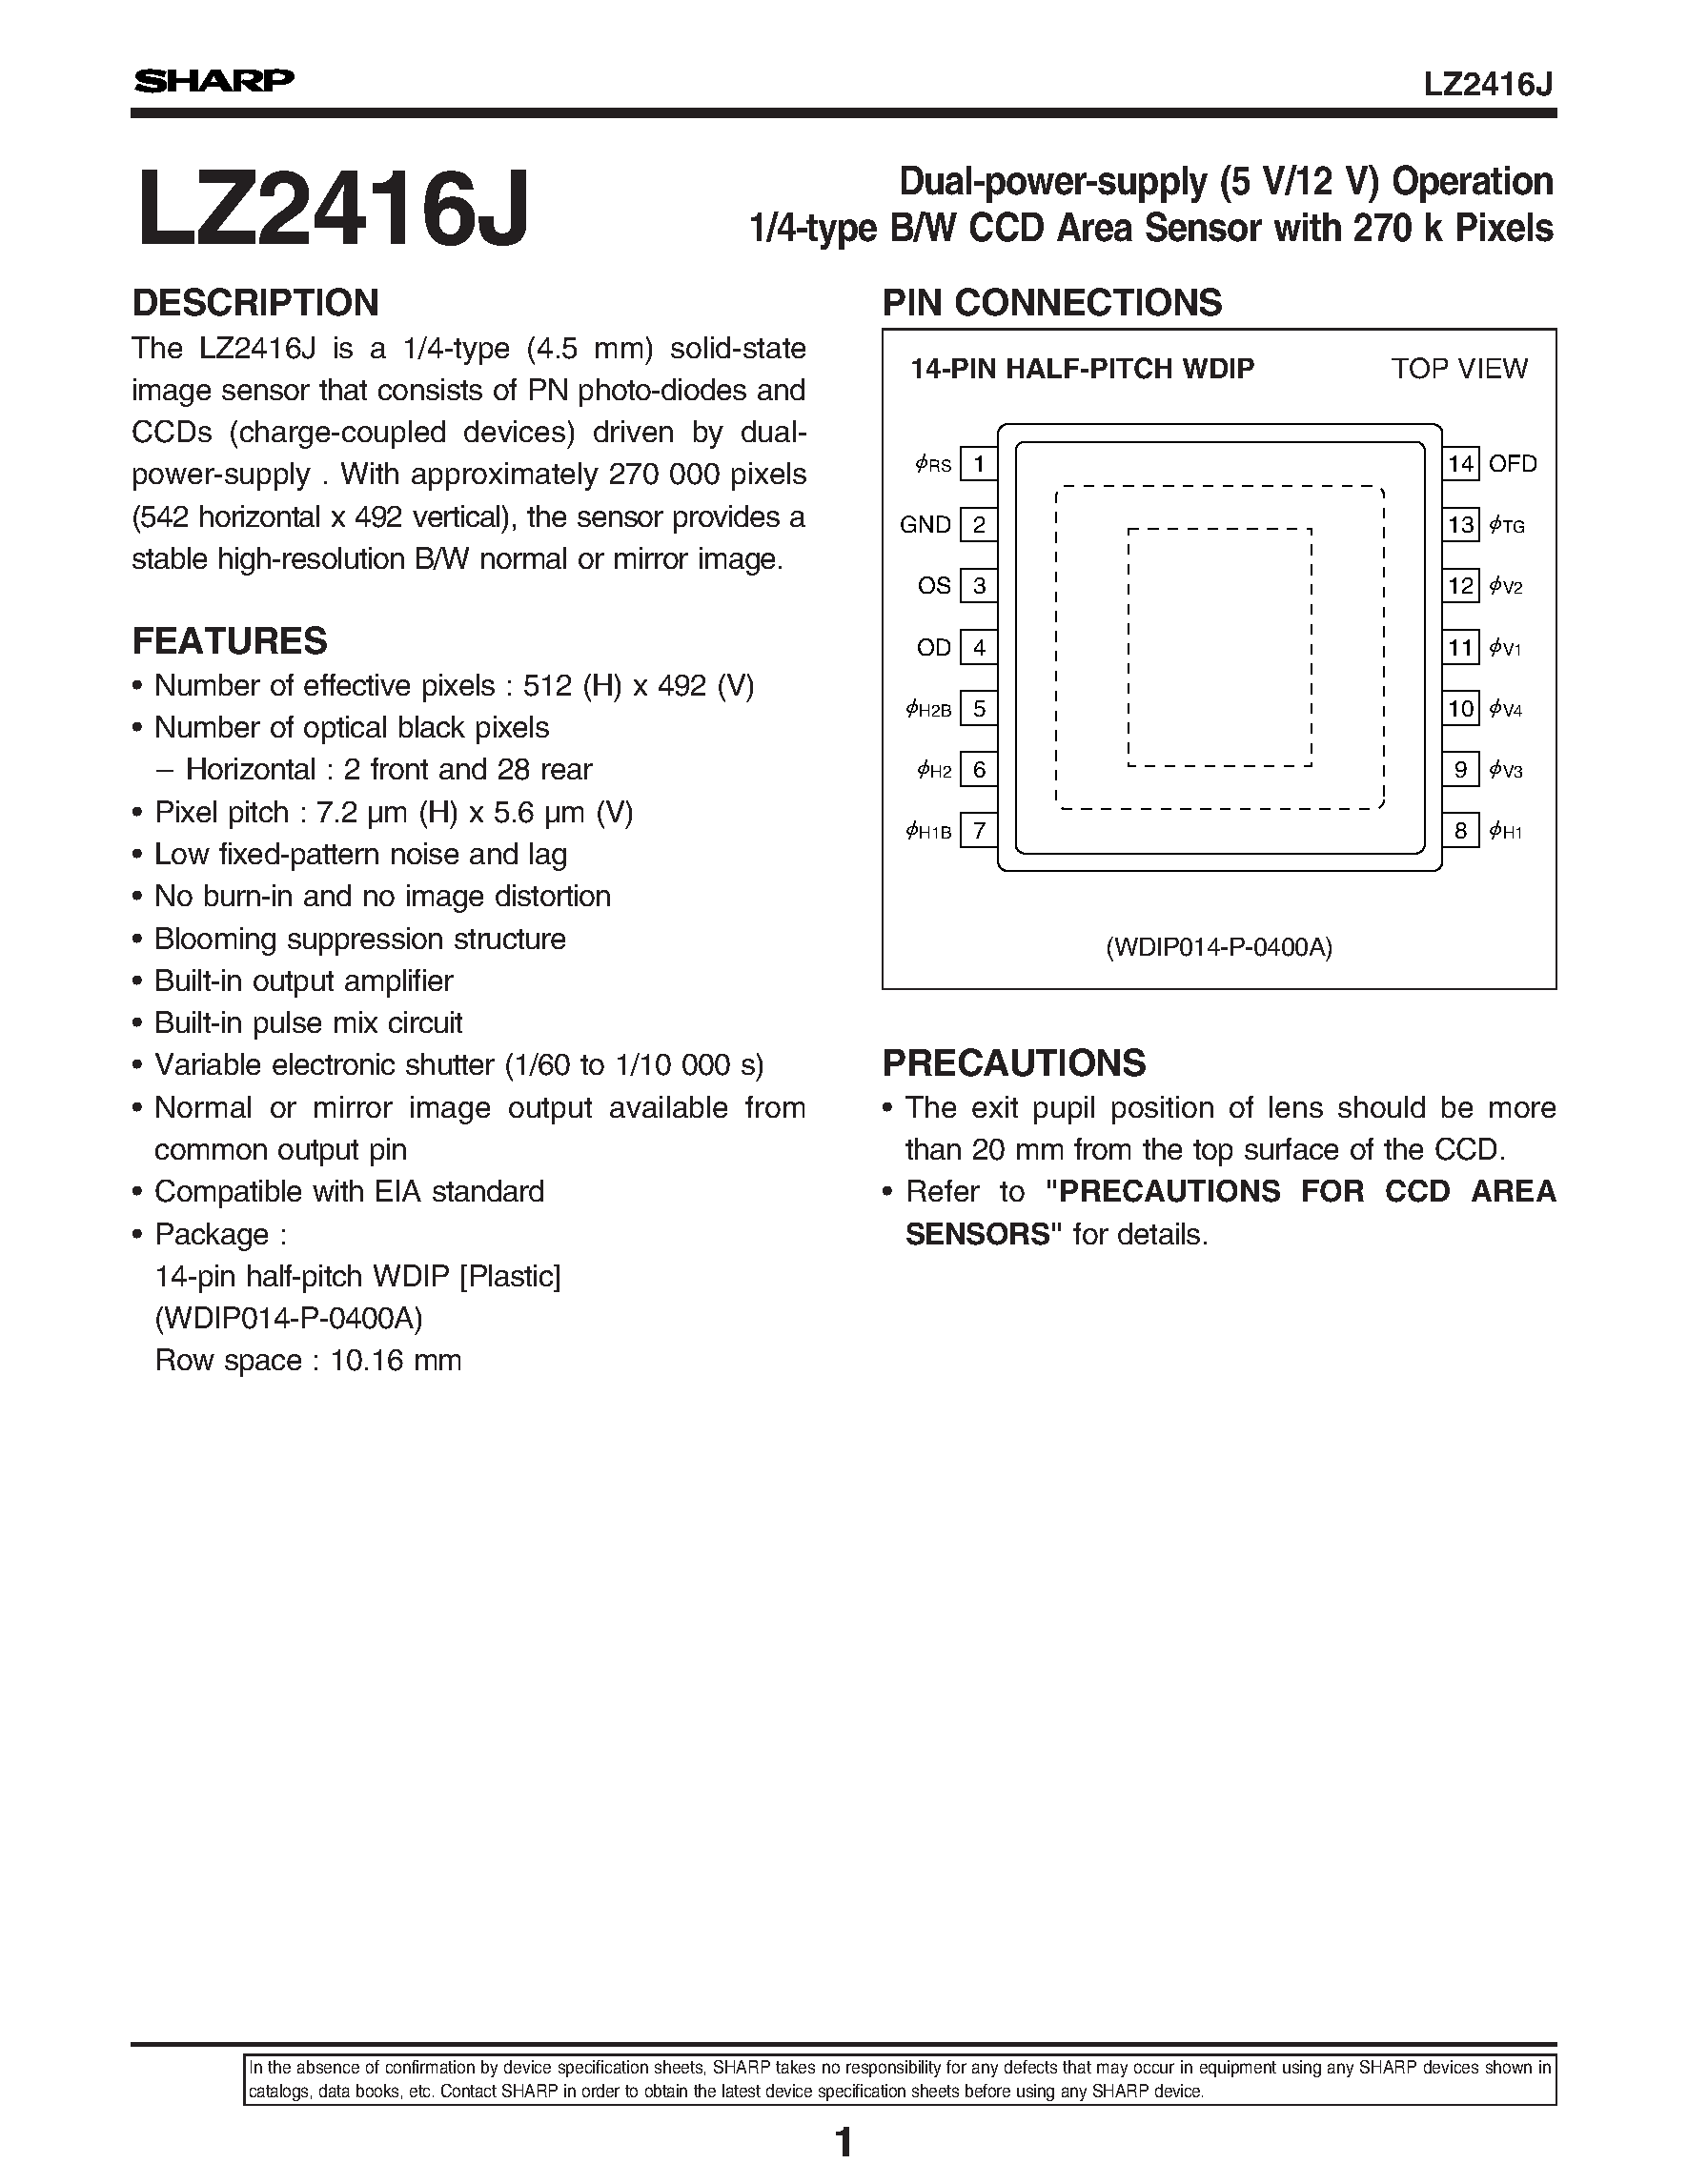 Datasheet LZ2416J - Dual-power-supply (5 V/12 V) Operation 1/4-type B/W CCD Area Sensor with 270 k Pixels page 1